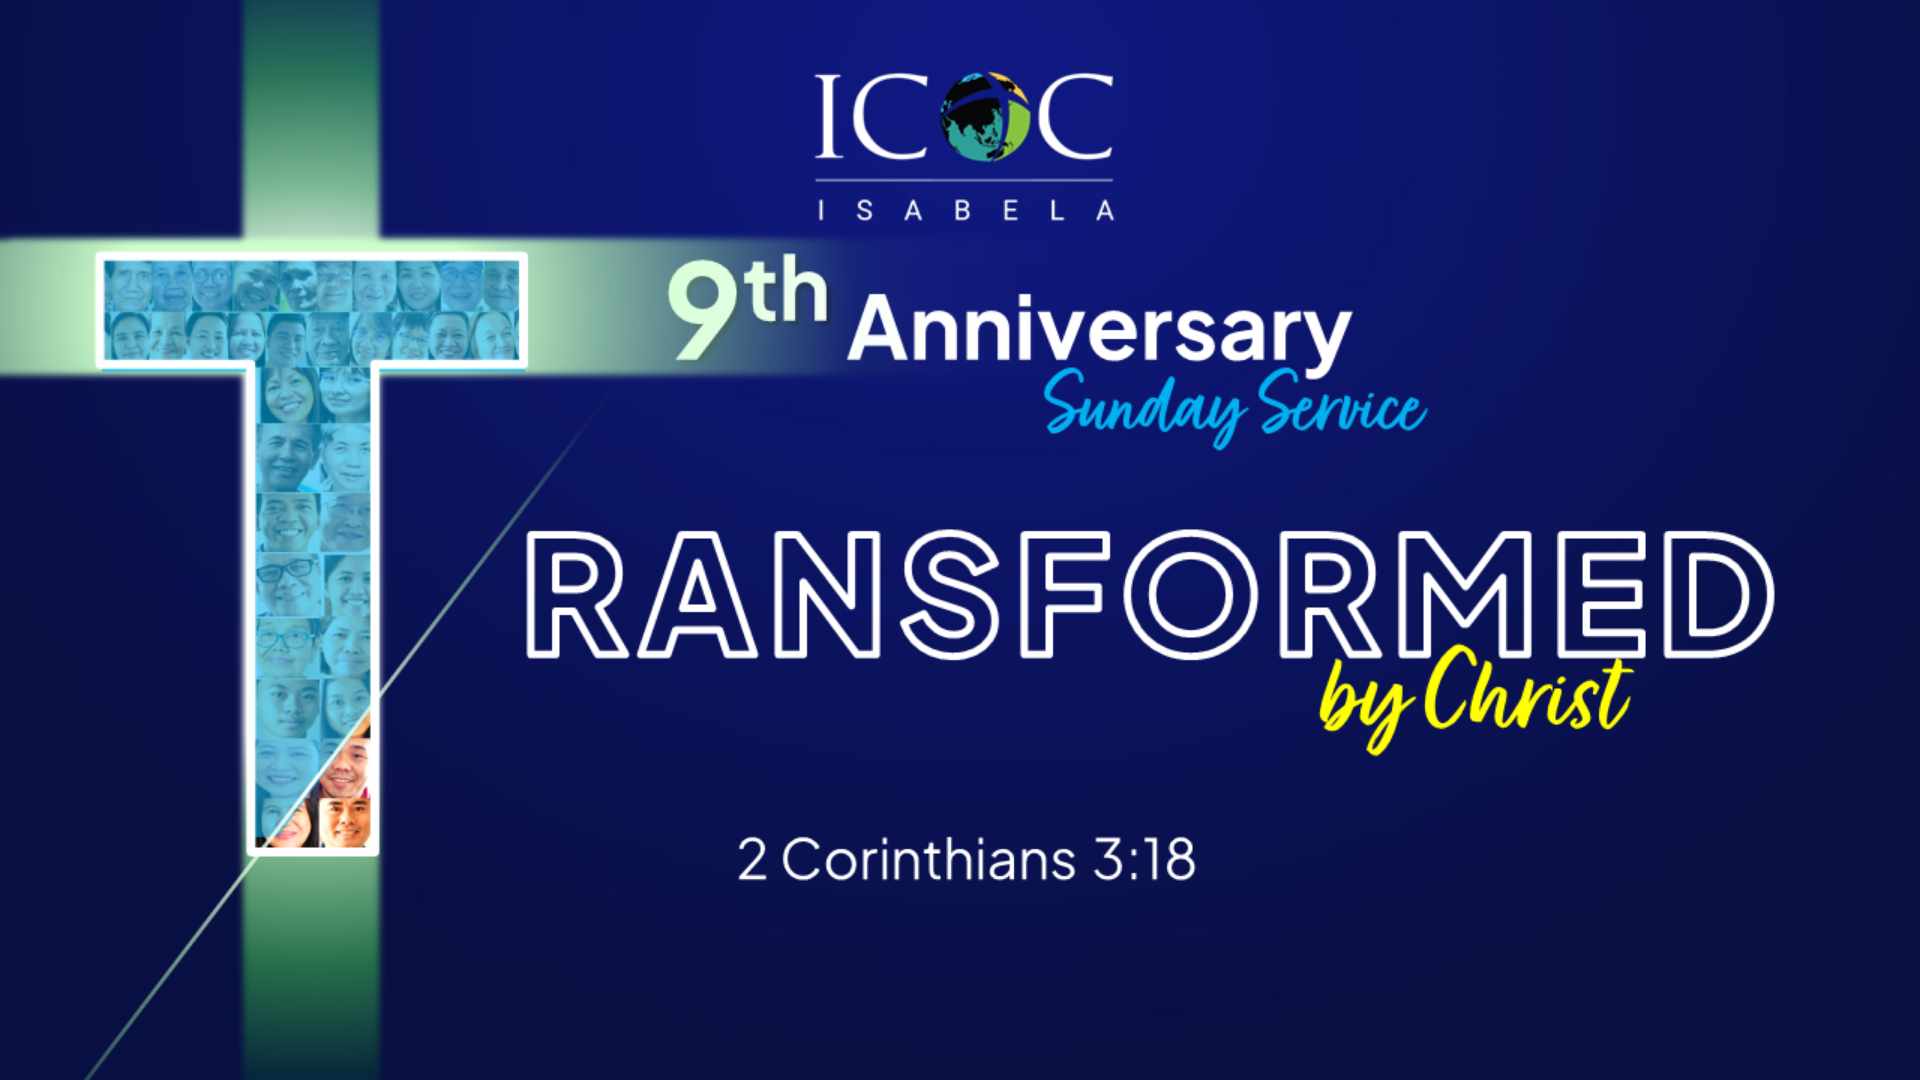 ICOC Isabela celebrates 9th anniversary